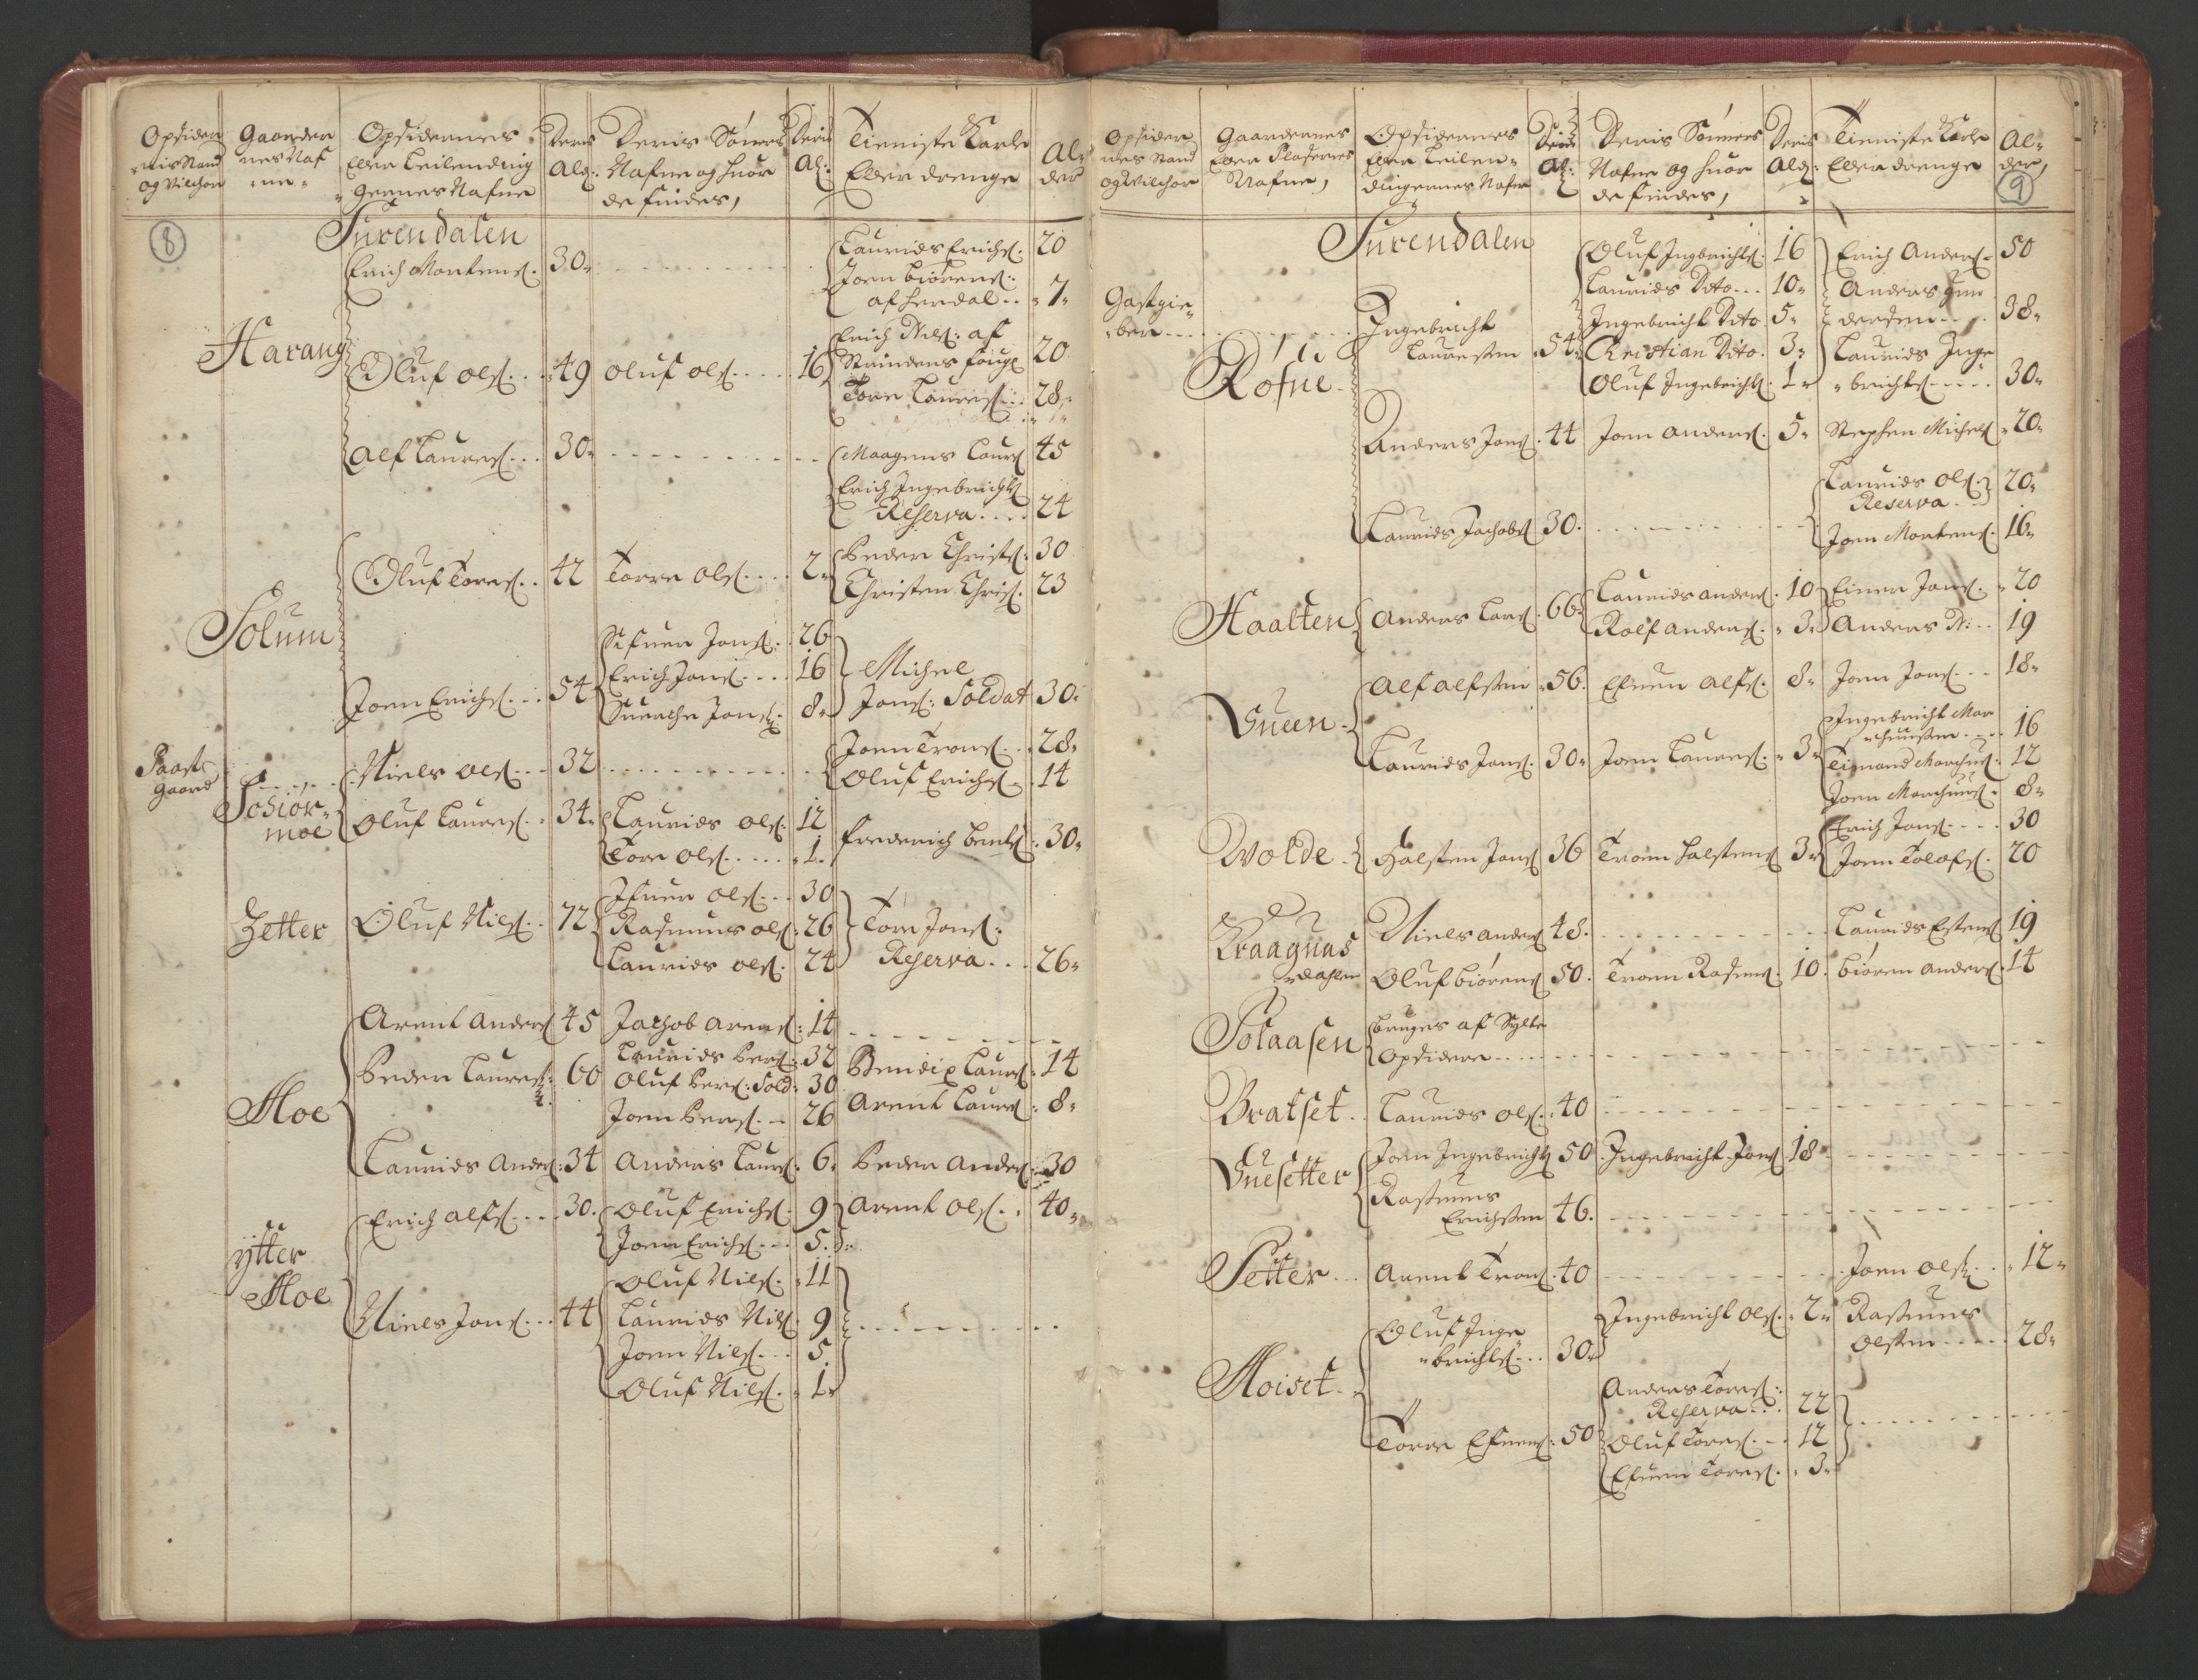 RA, Census (manntall) 1701, no. 11: Nordmøre fogderi and Romsdal fogderi, 1701, p. 8-9